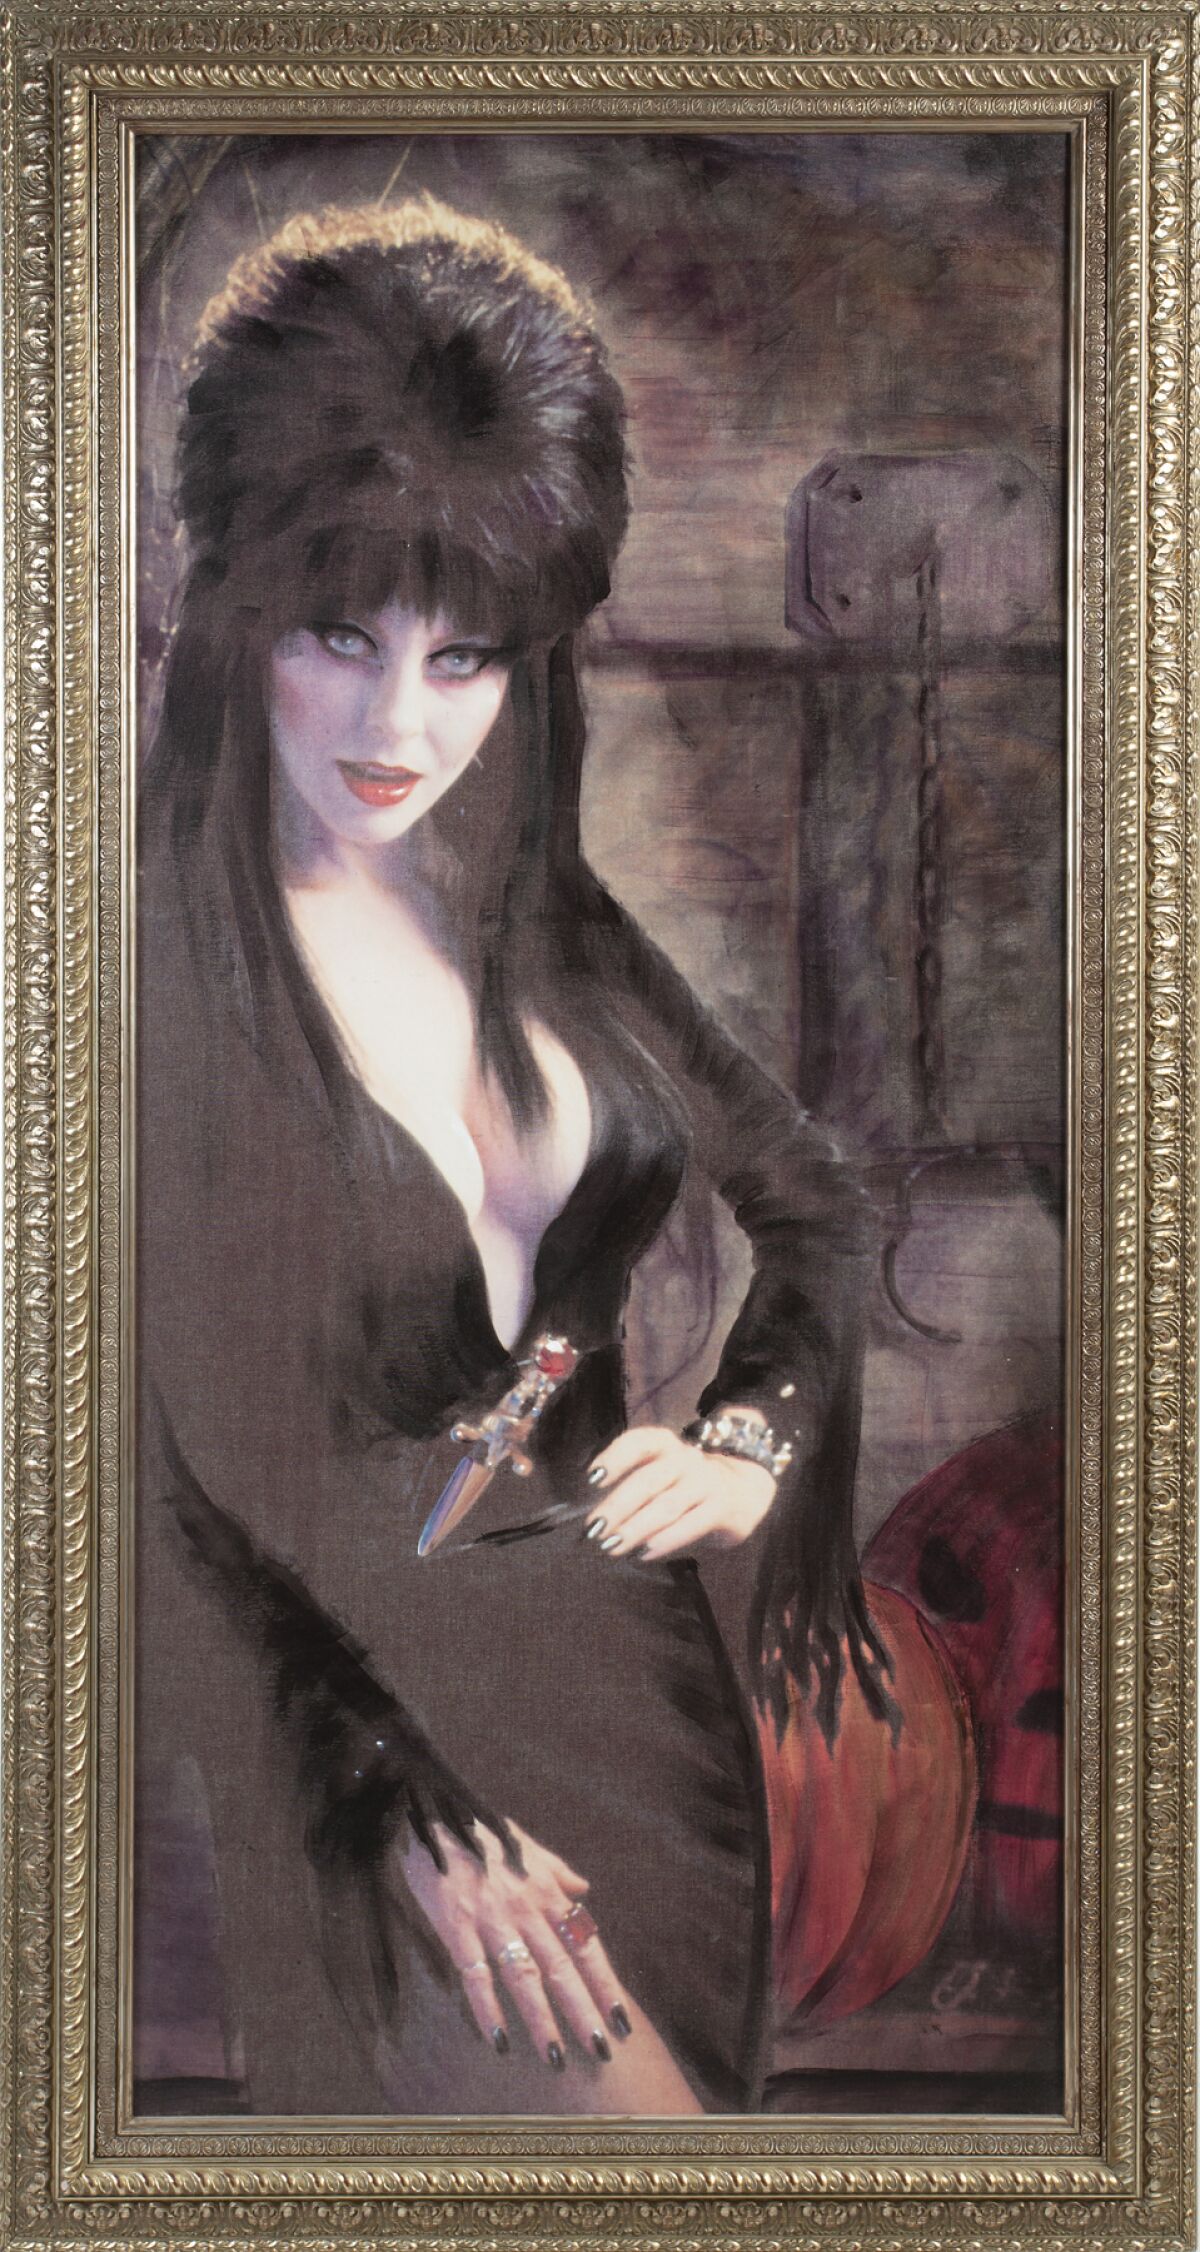 A large giclée work featuring an image of Elvira